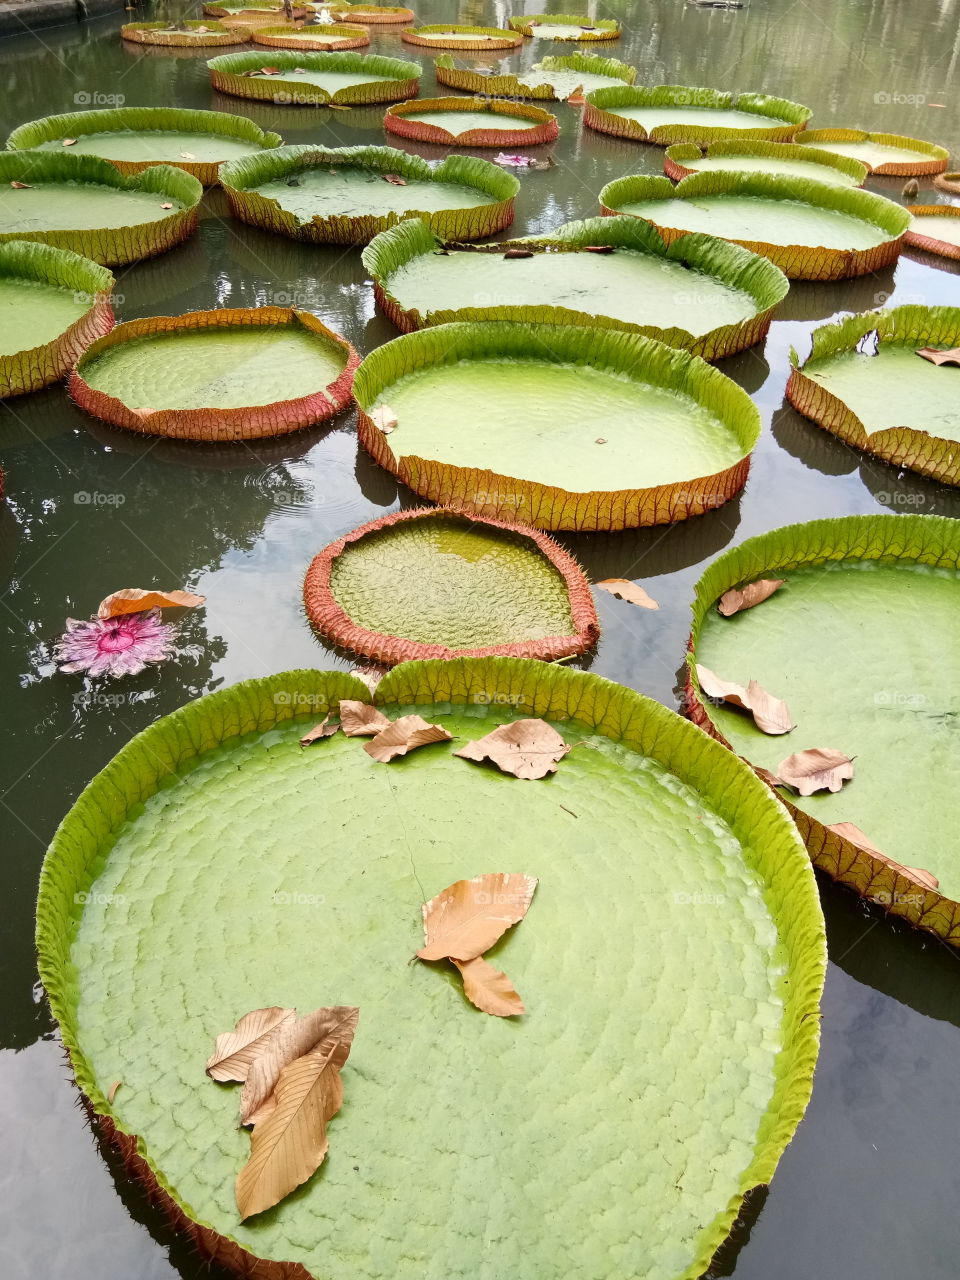 lotus
water
big
nature